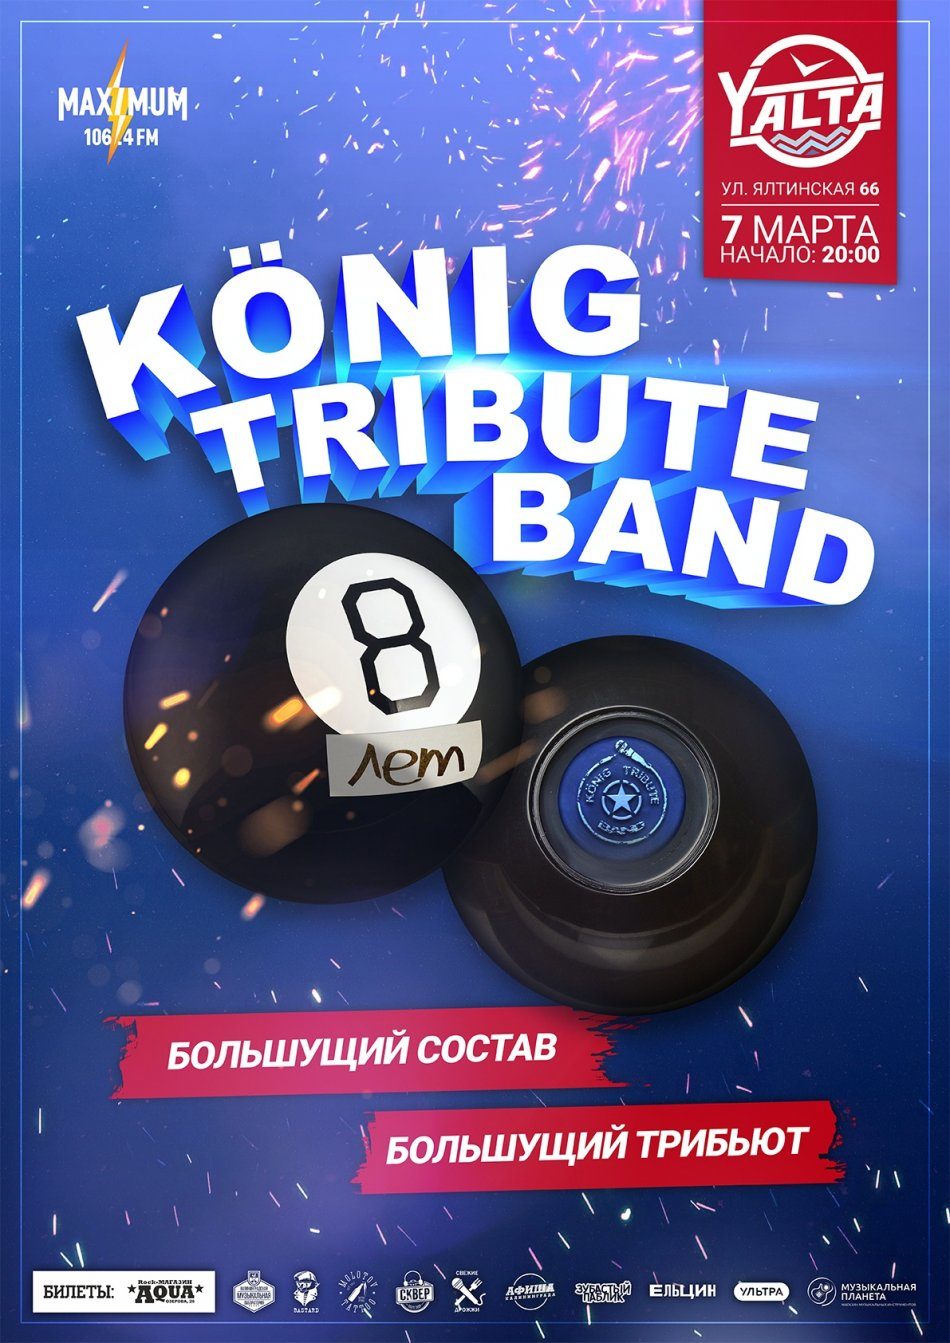 Ленинград tribute show